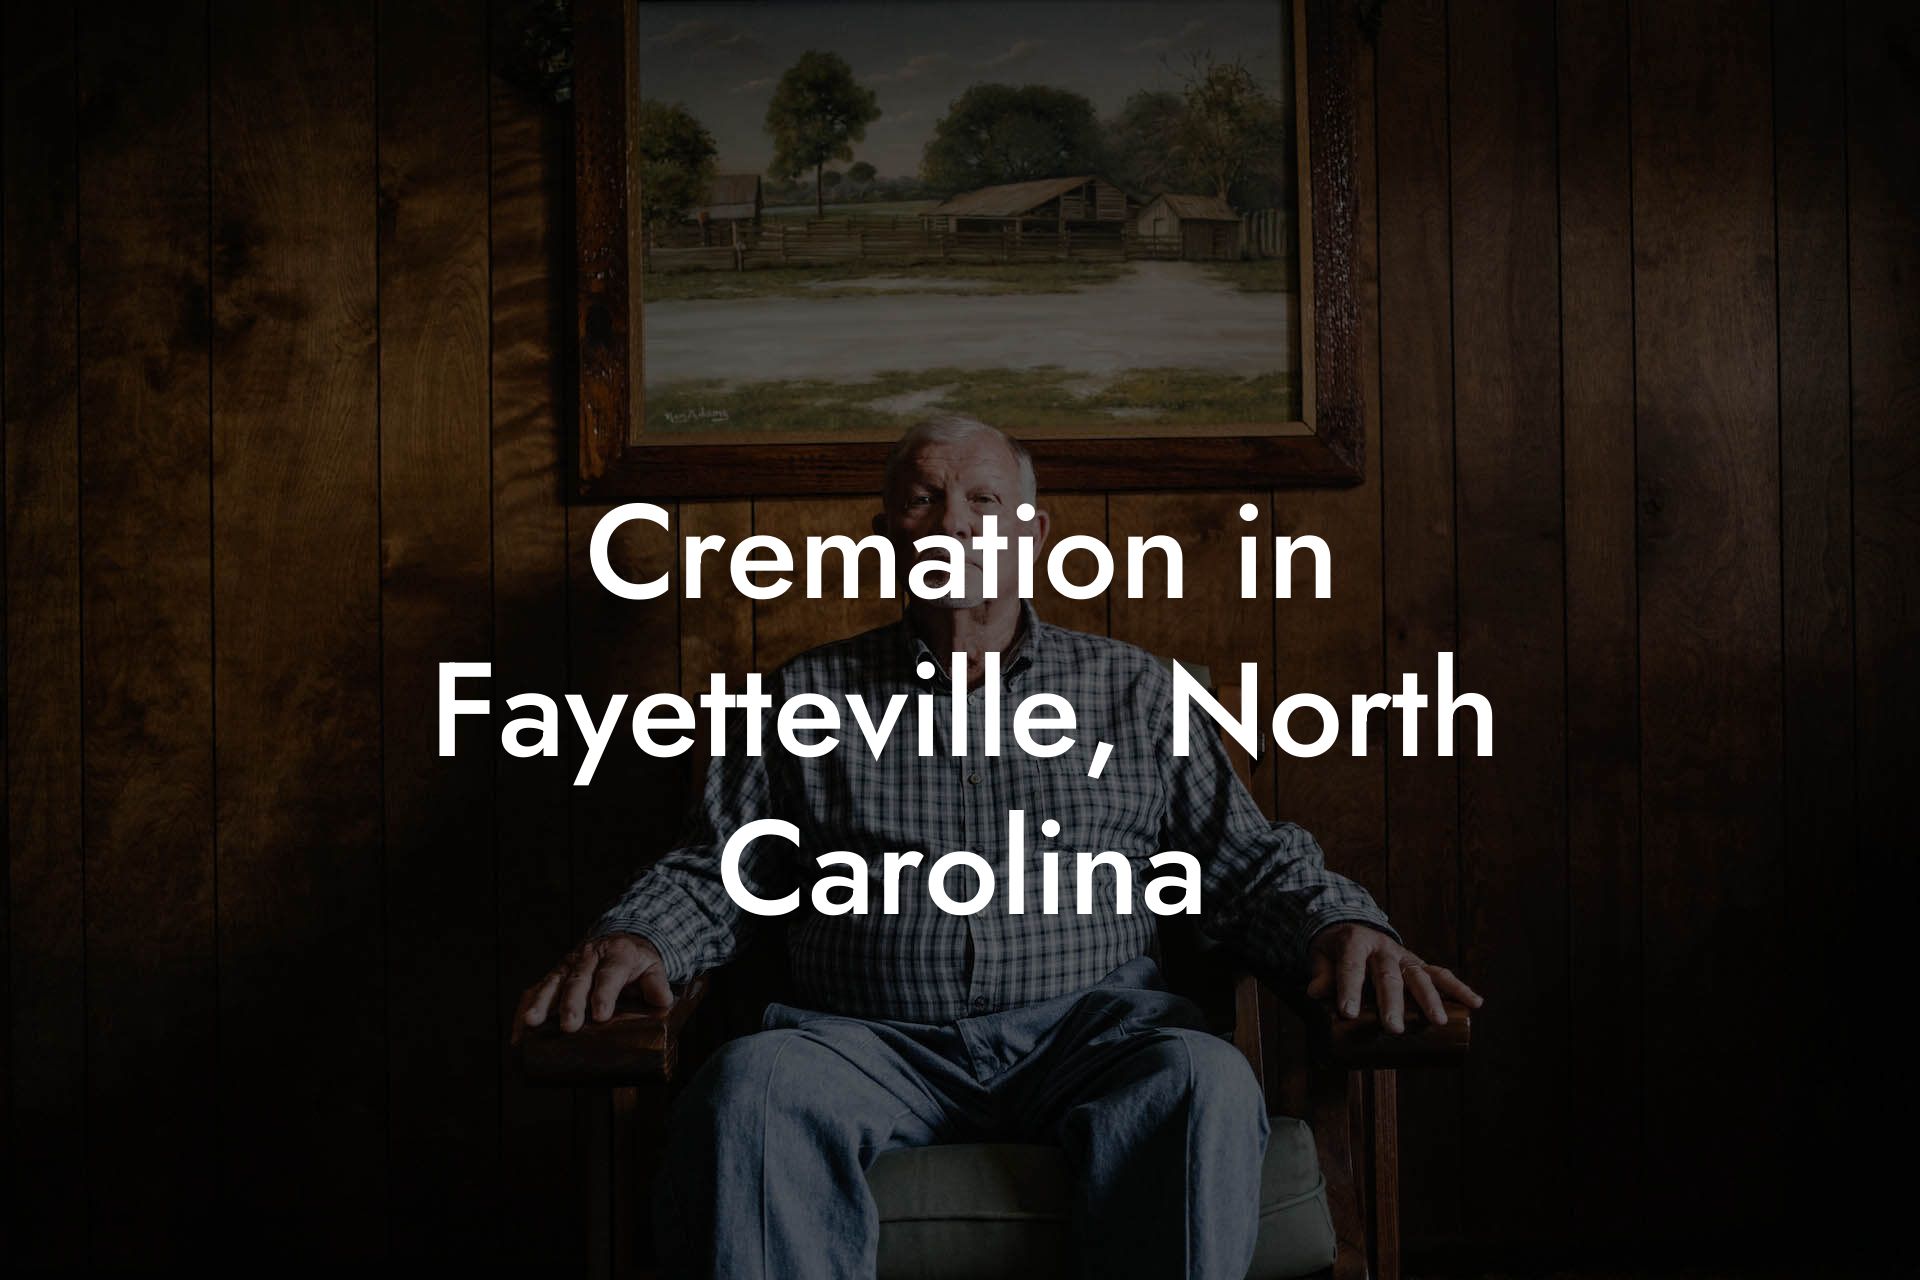 Cremation in Fayetteville, North Carolina